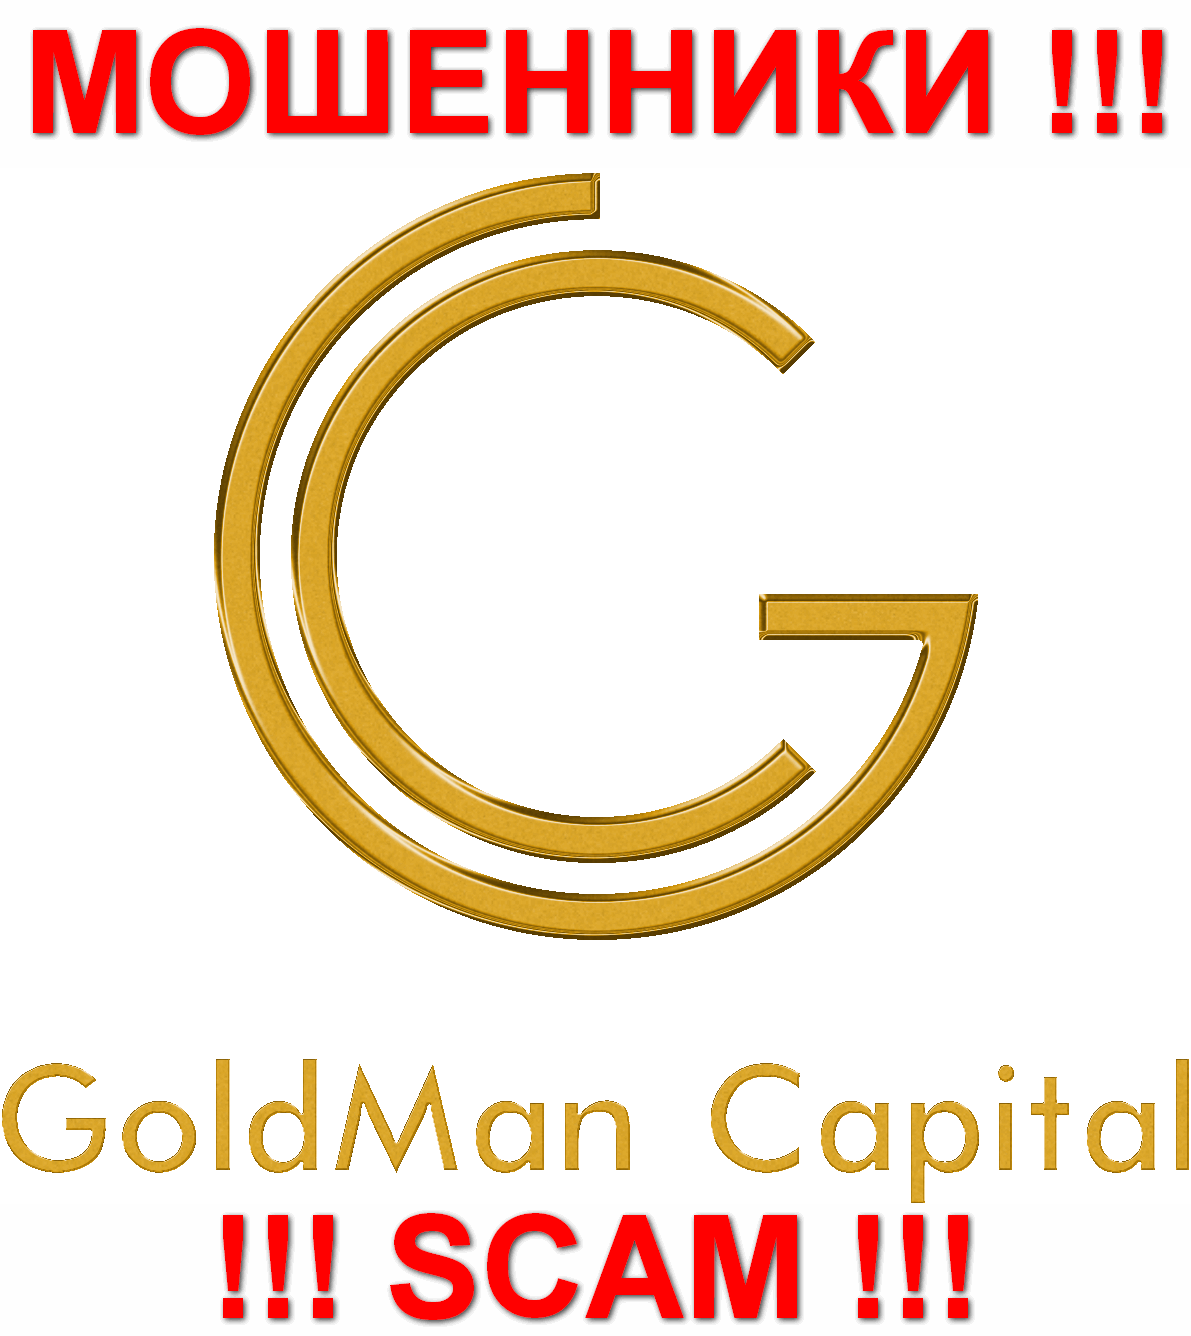 GoldMan Capital - КИДАЛЫ !!! SCAM !!!